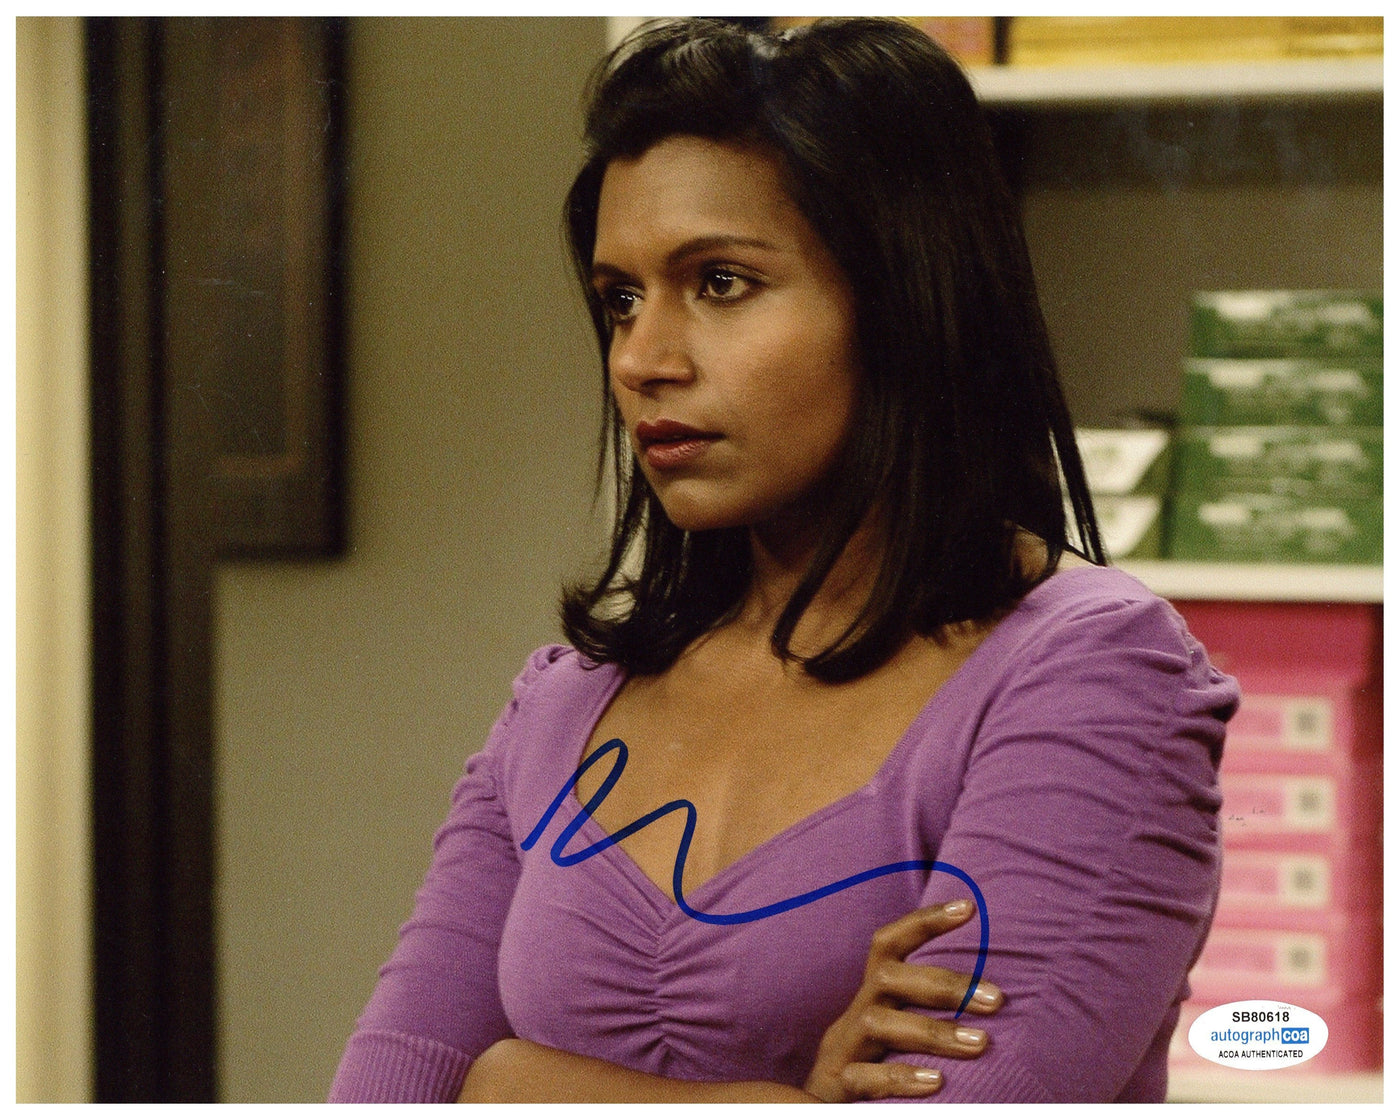 Mindy Kaling Signed 8x10 Photo The Office Kelly Kapoor Autographed ACOA